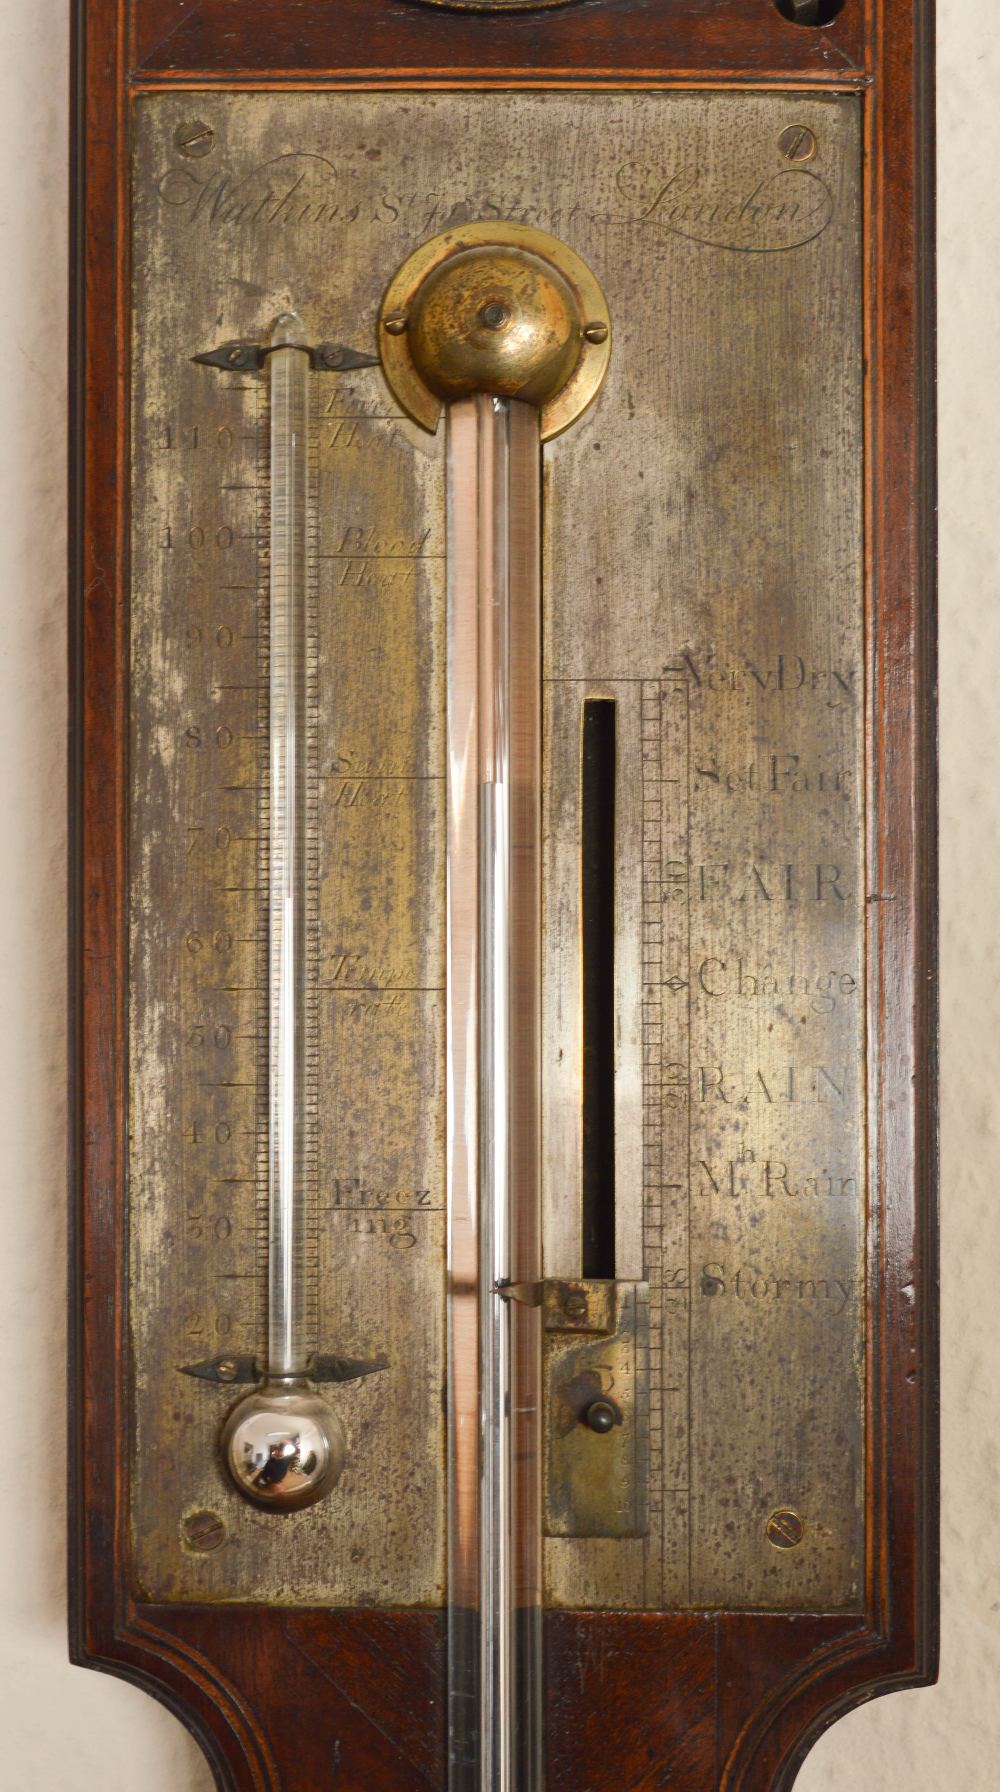 A George III mahogany, boxwood and ebony lined stick barometer, Watkins, St. Fa's Street, London, - Image 2 of 2